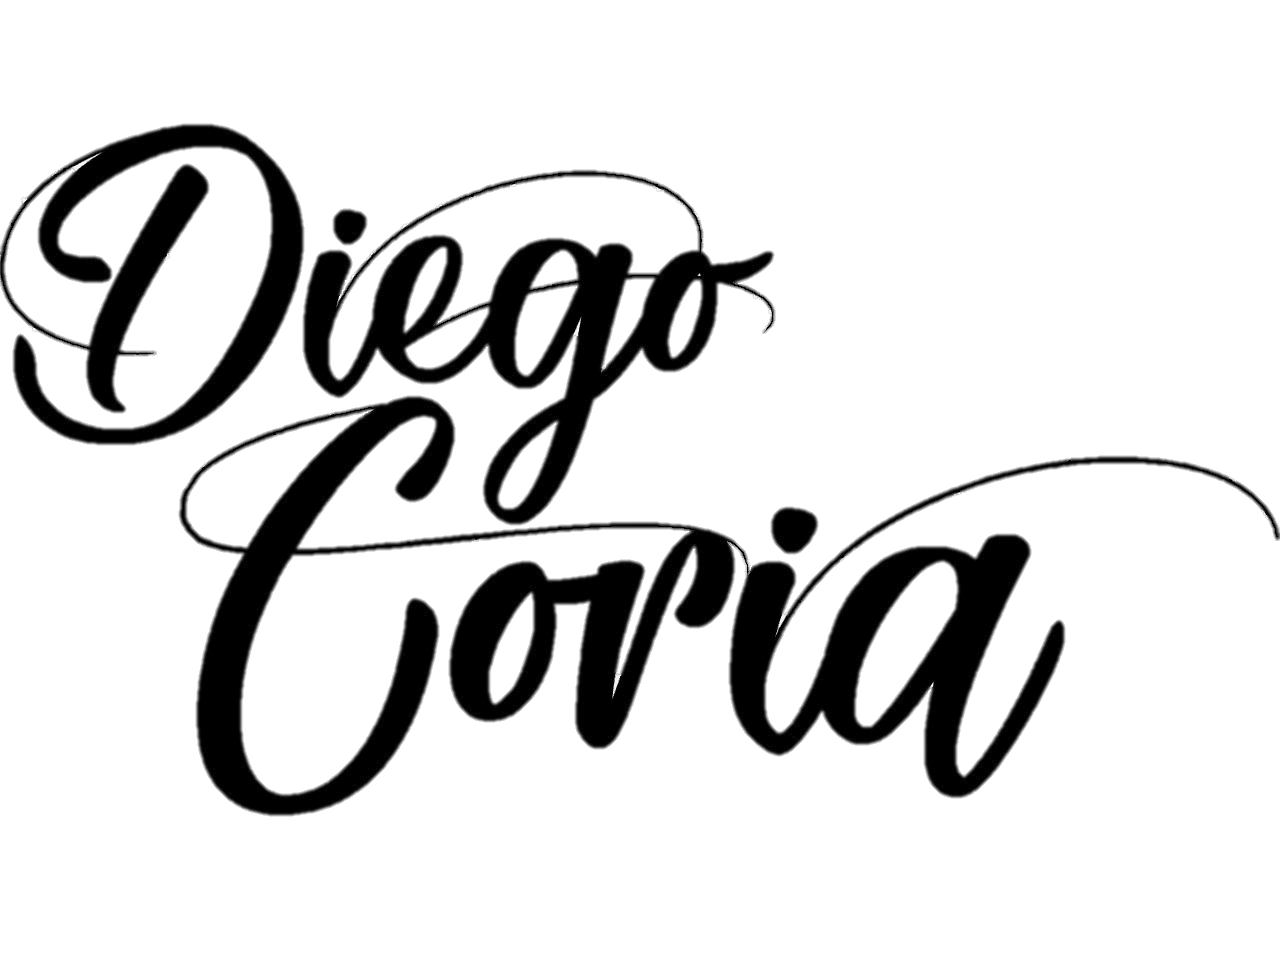 Diego Coria Oficial